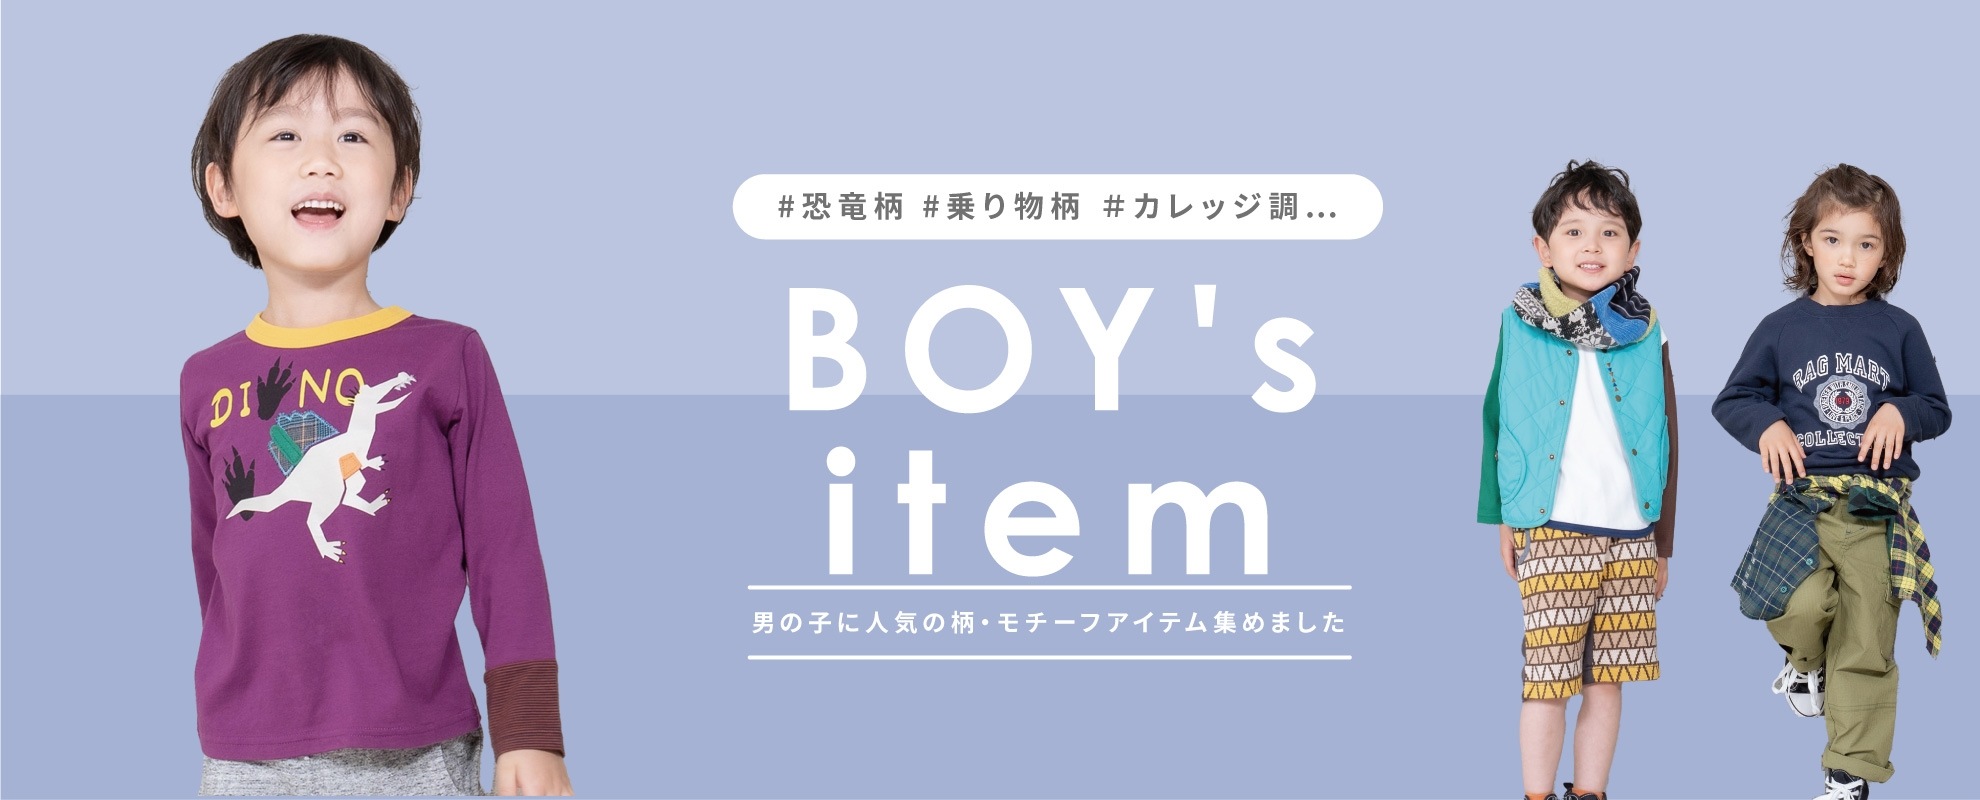 BOY's item